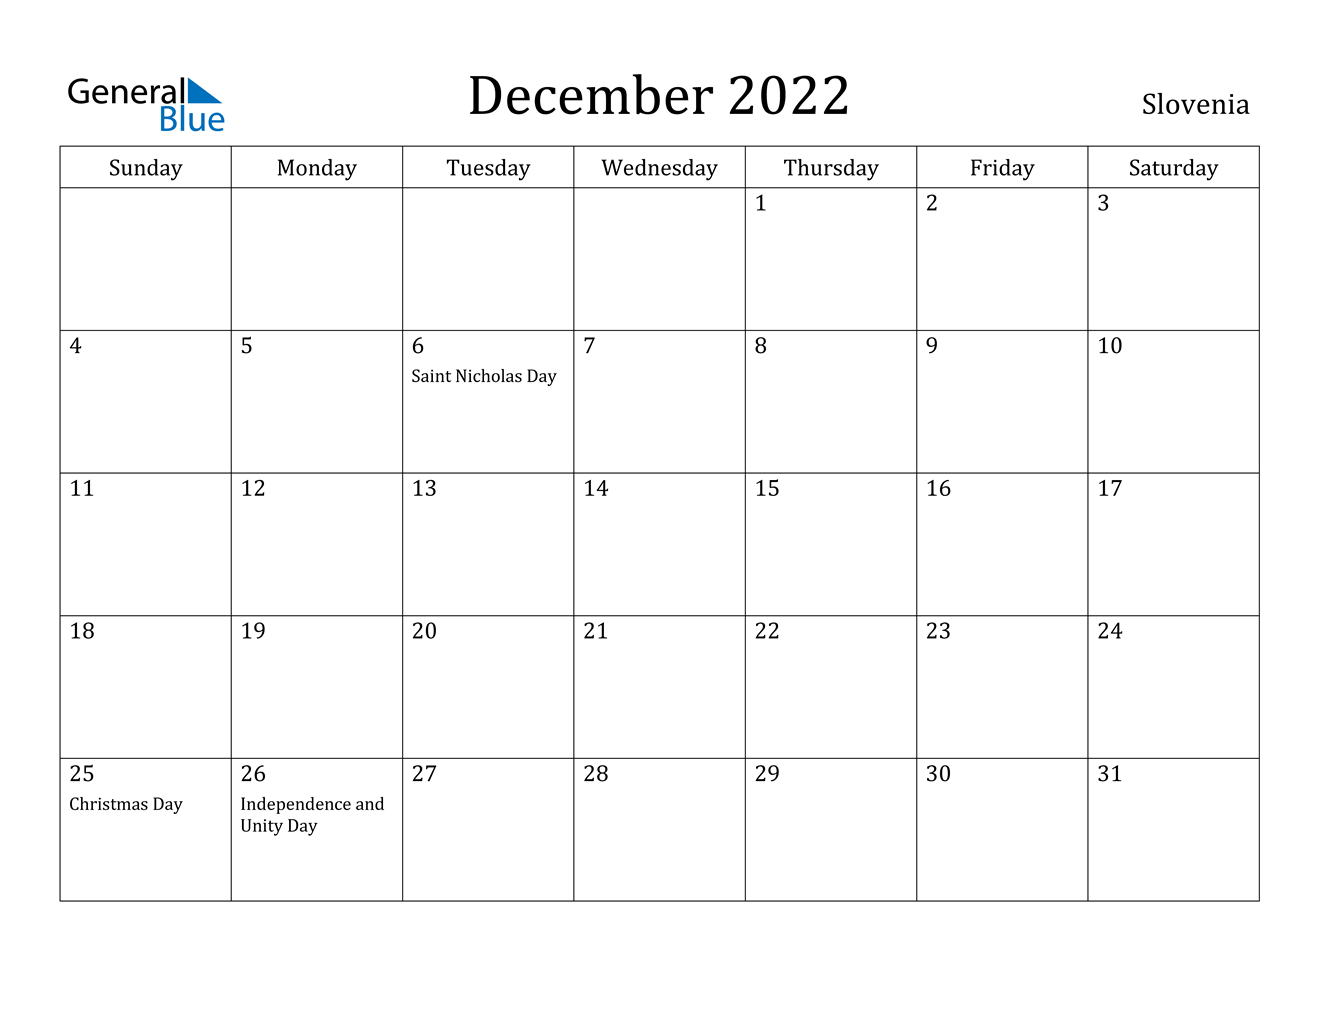 December 2022 Calendar - Slovenia